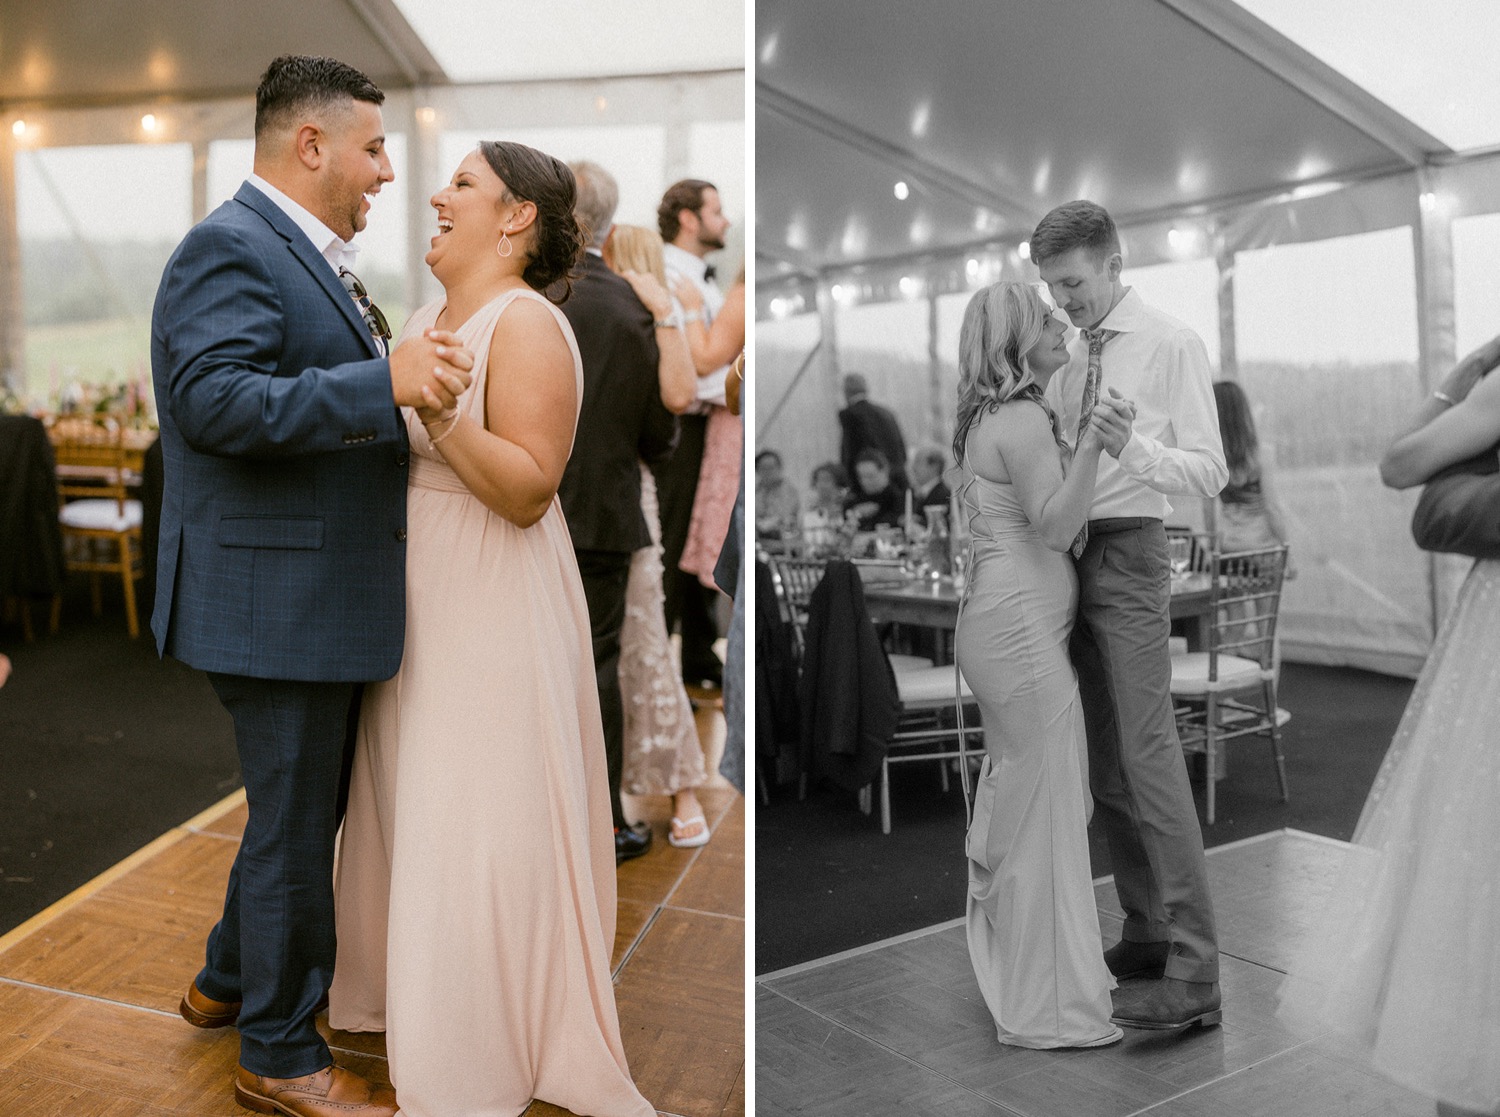 couples dancing at wedding reception